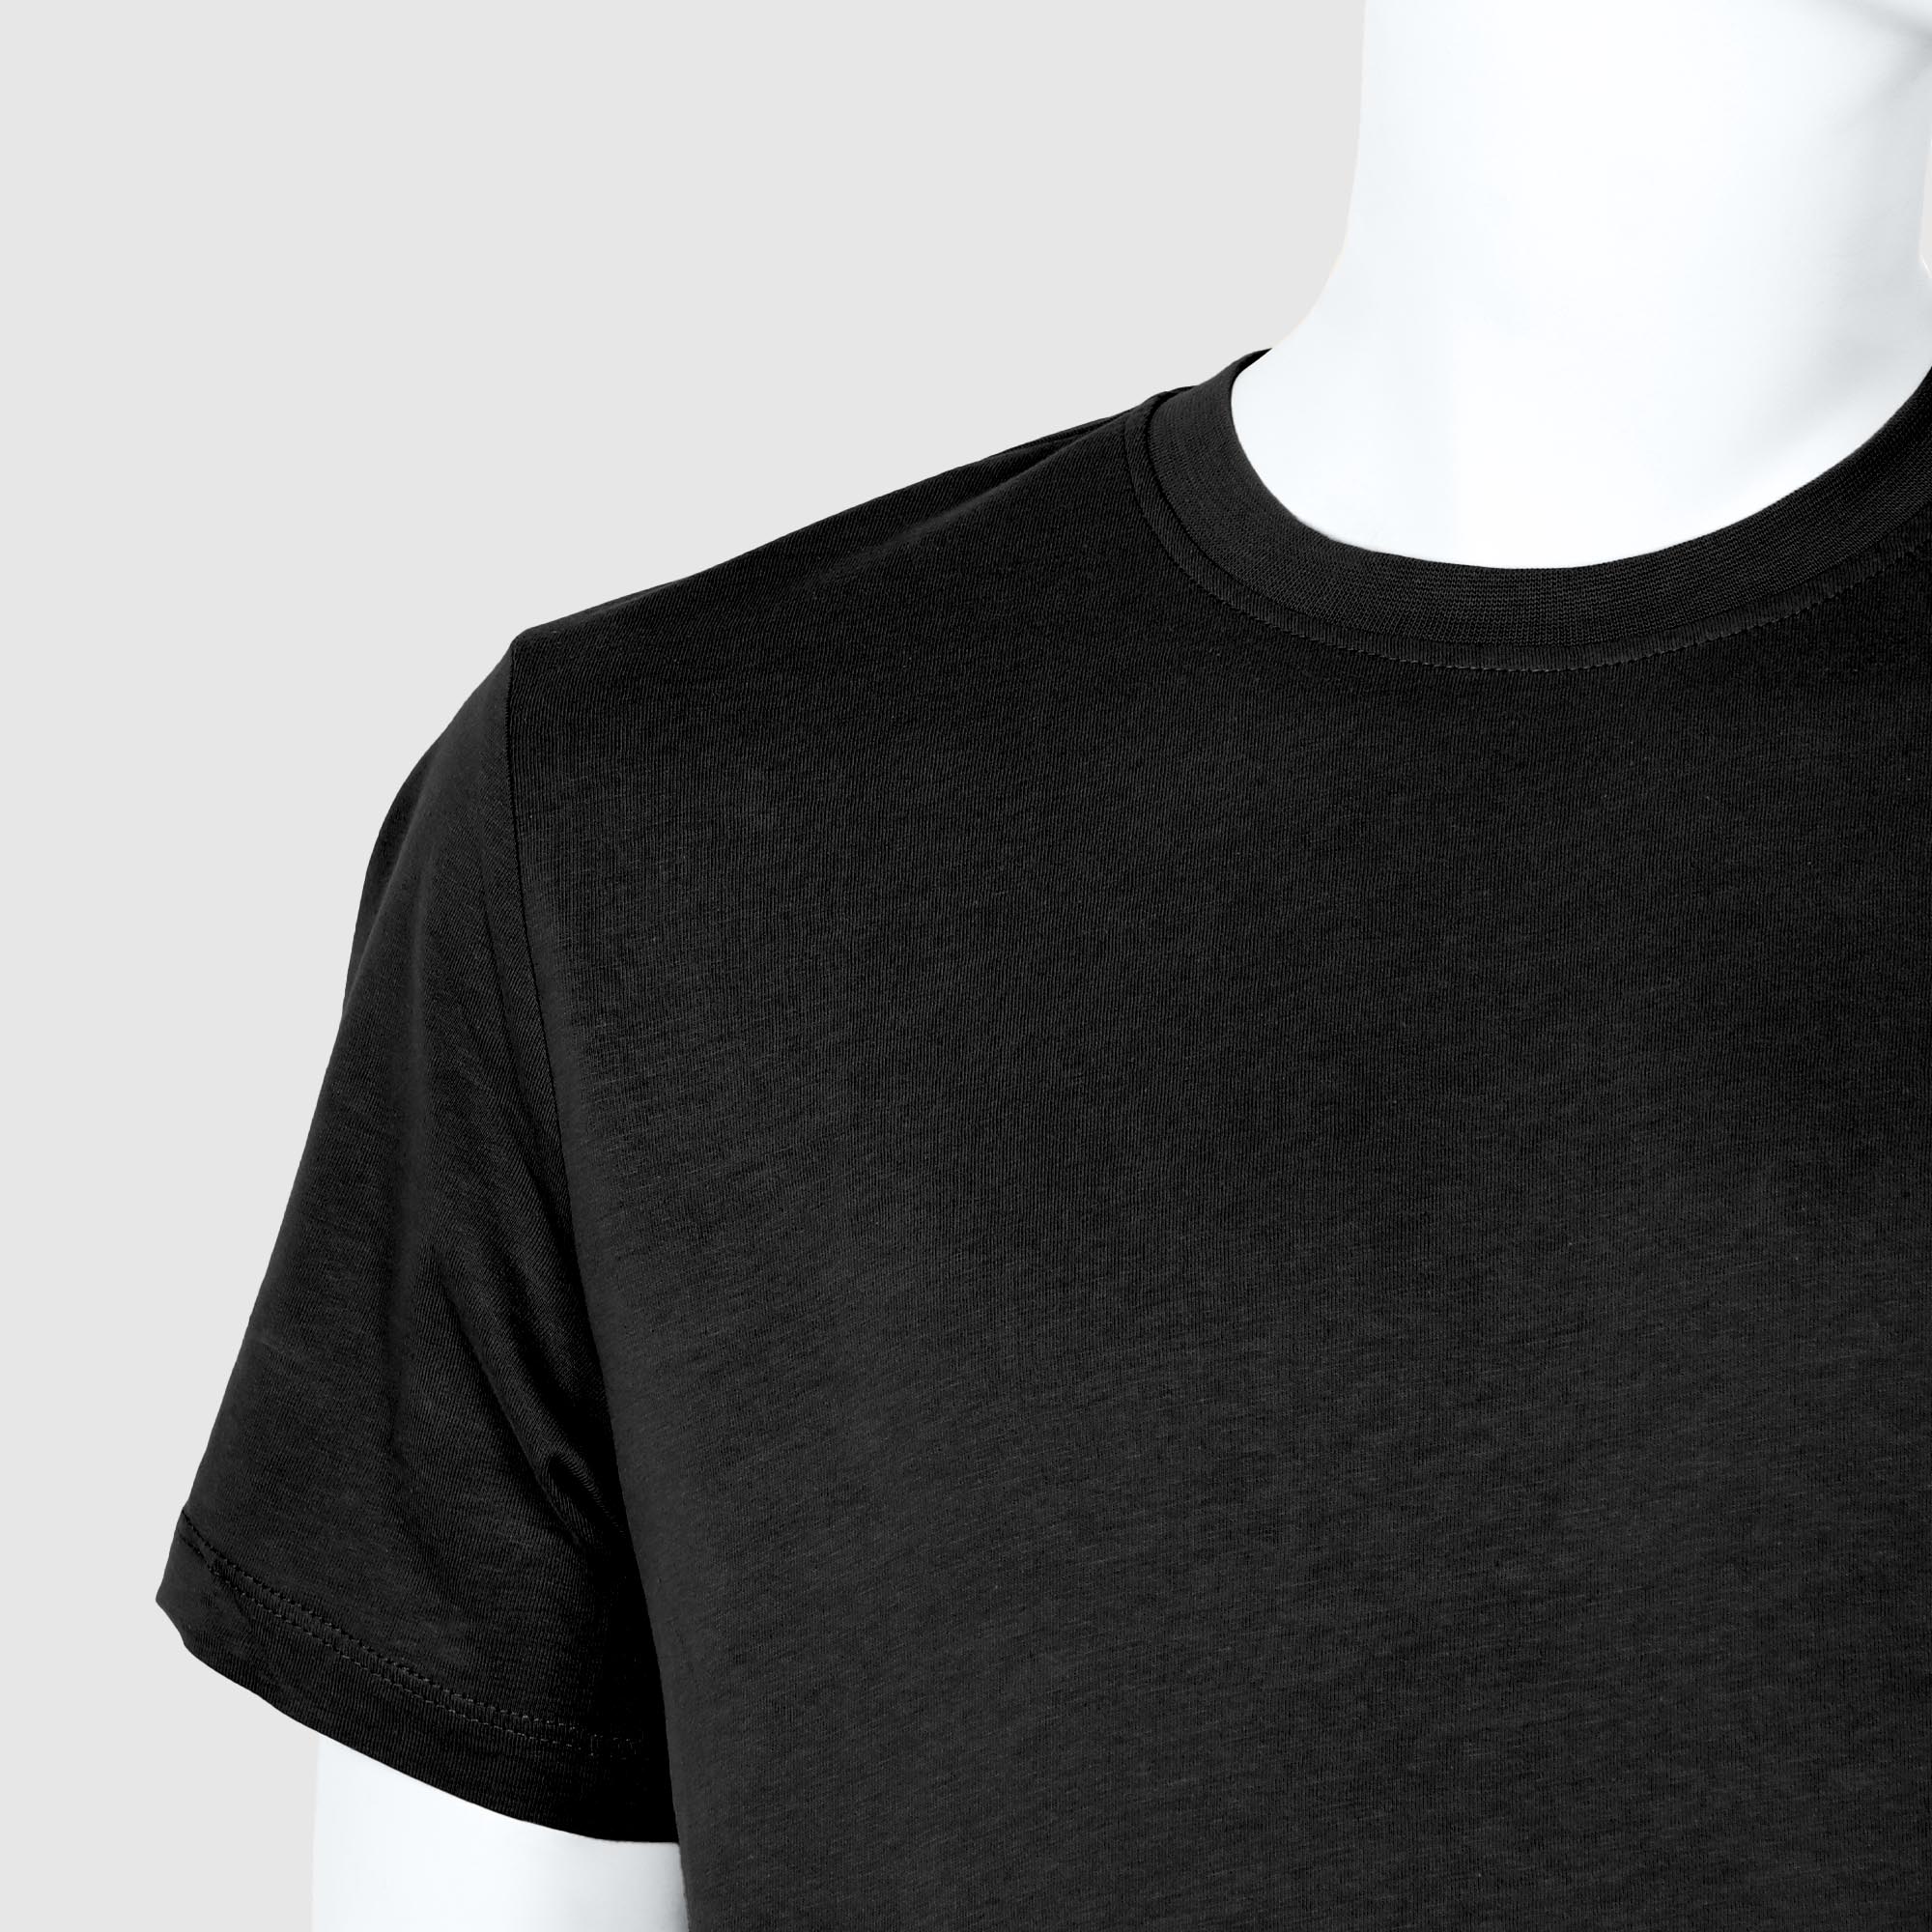 Мужская футболка Diva Teks чёрная (DTD-01), цвет чёрный, размер 44-46 - фото 3